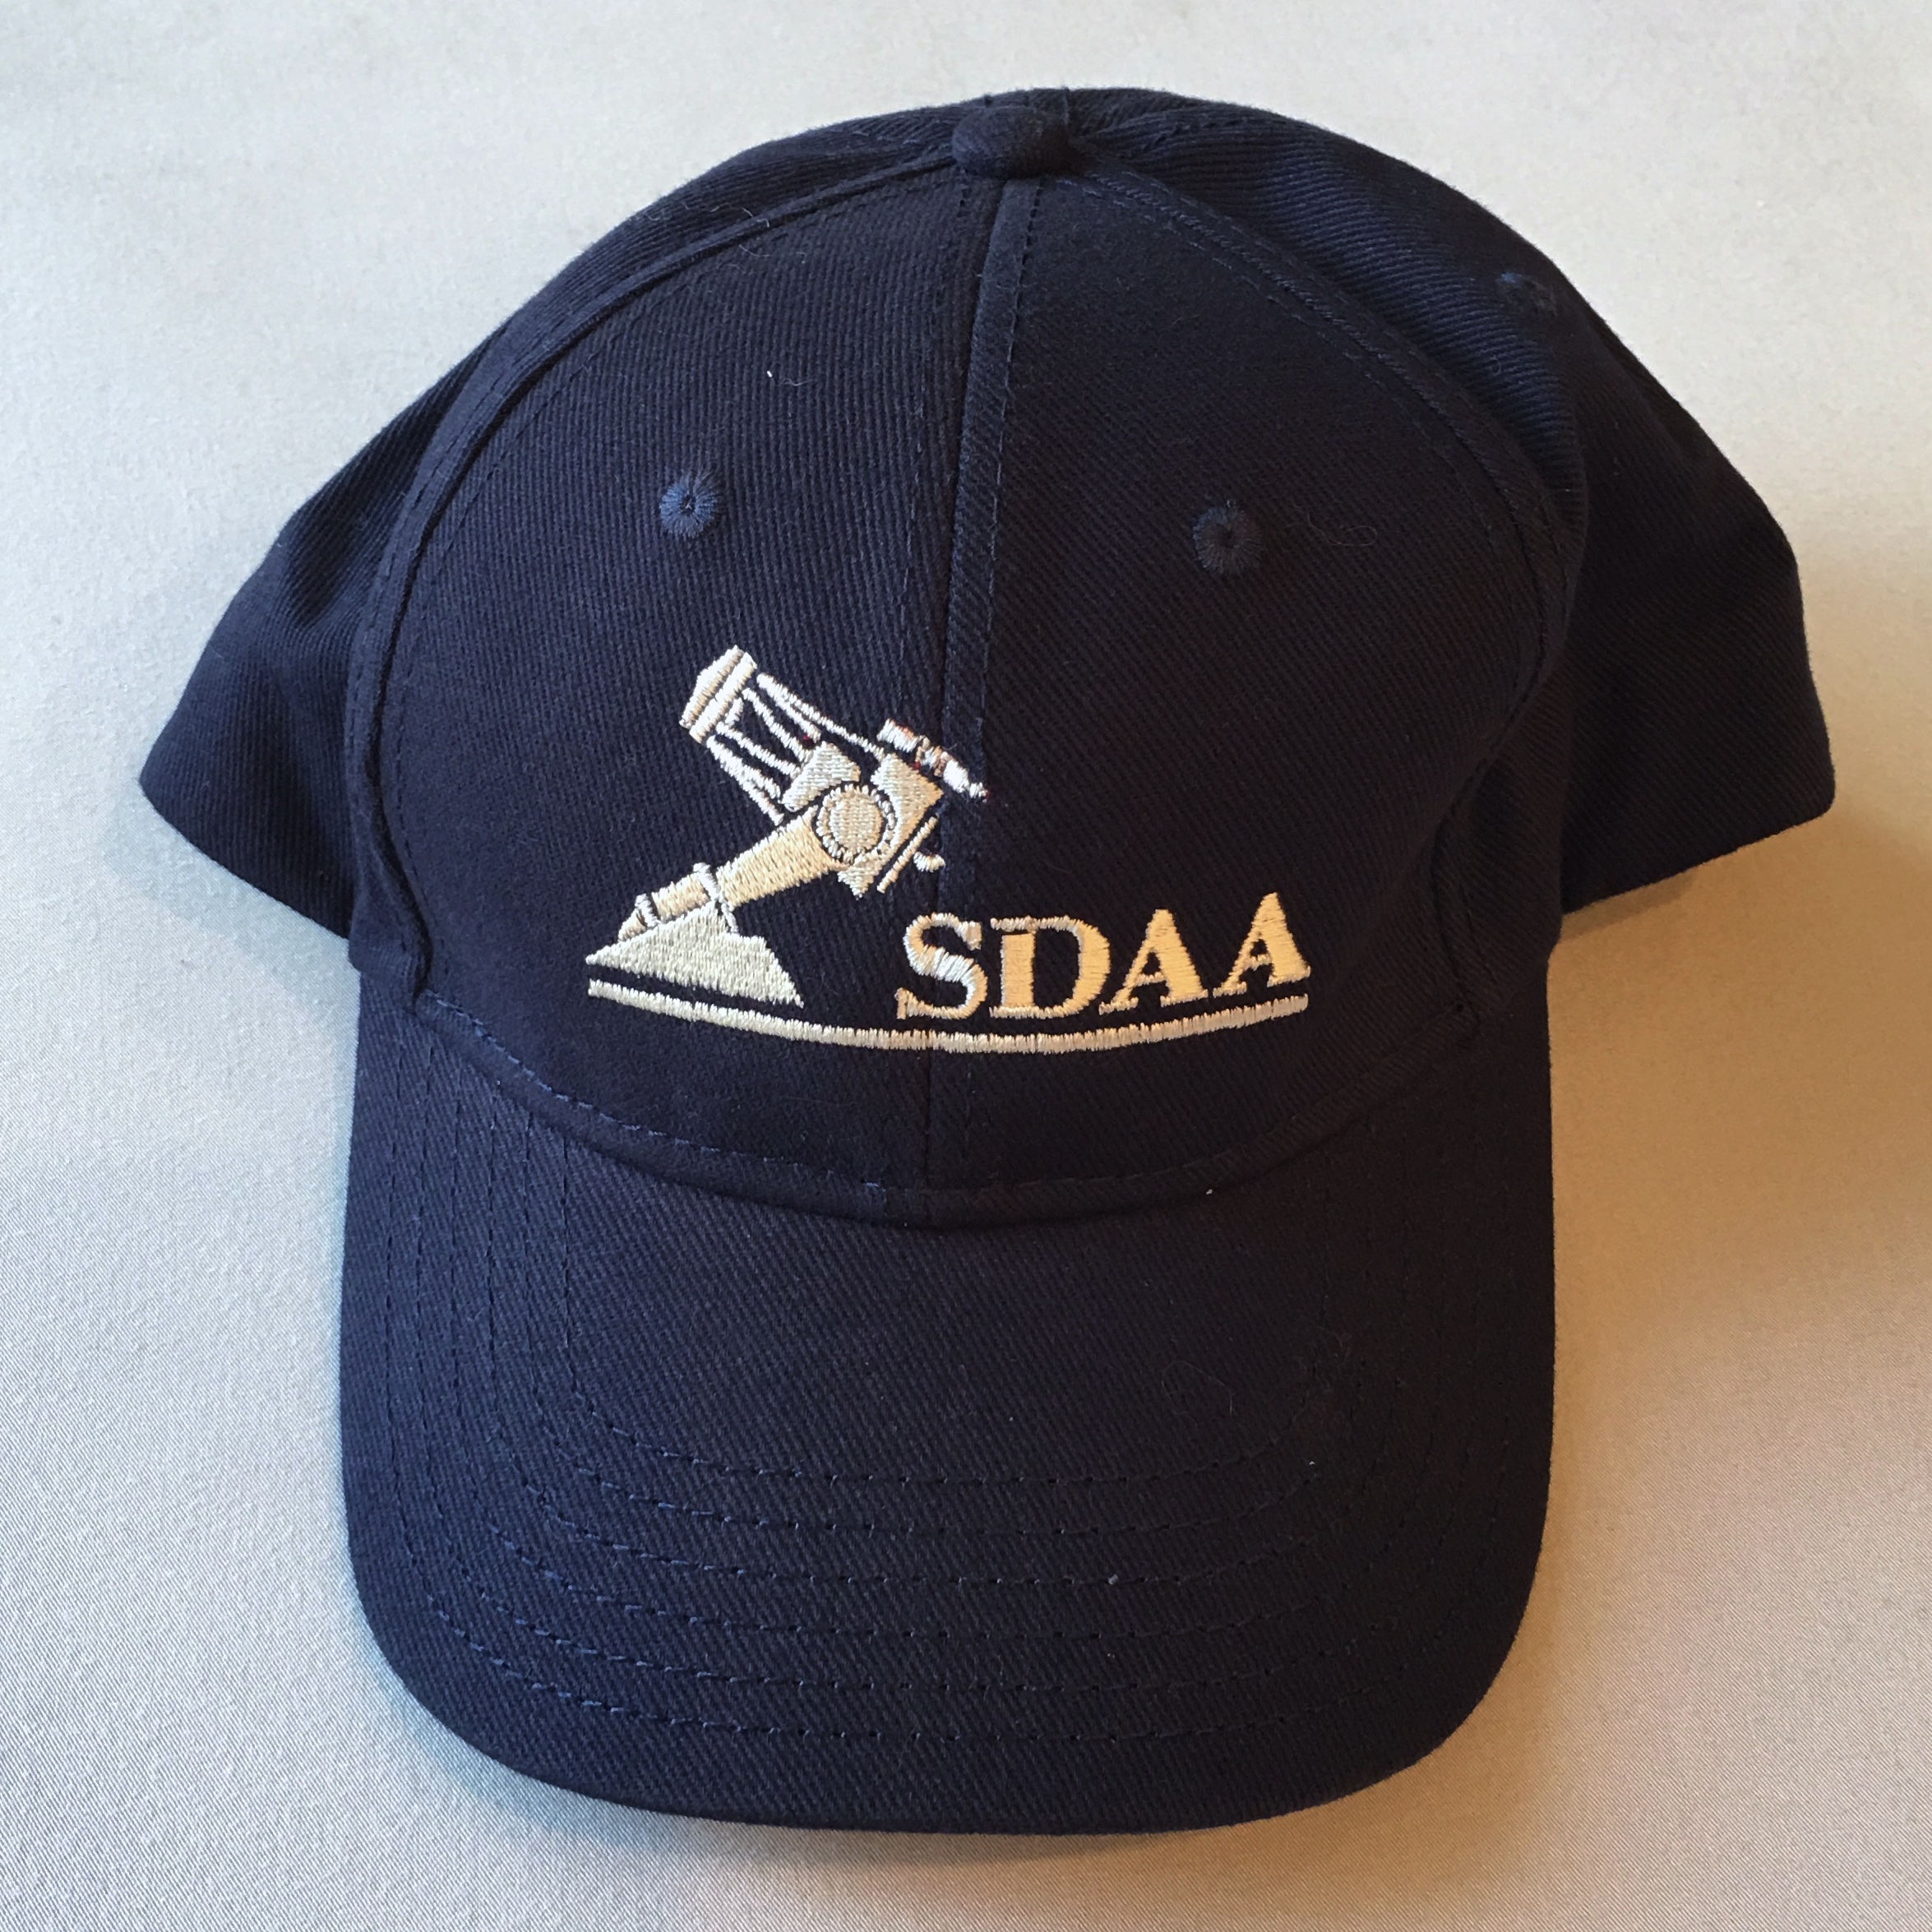 SDAA - SDAA Store